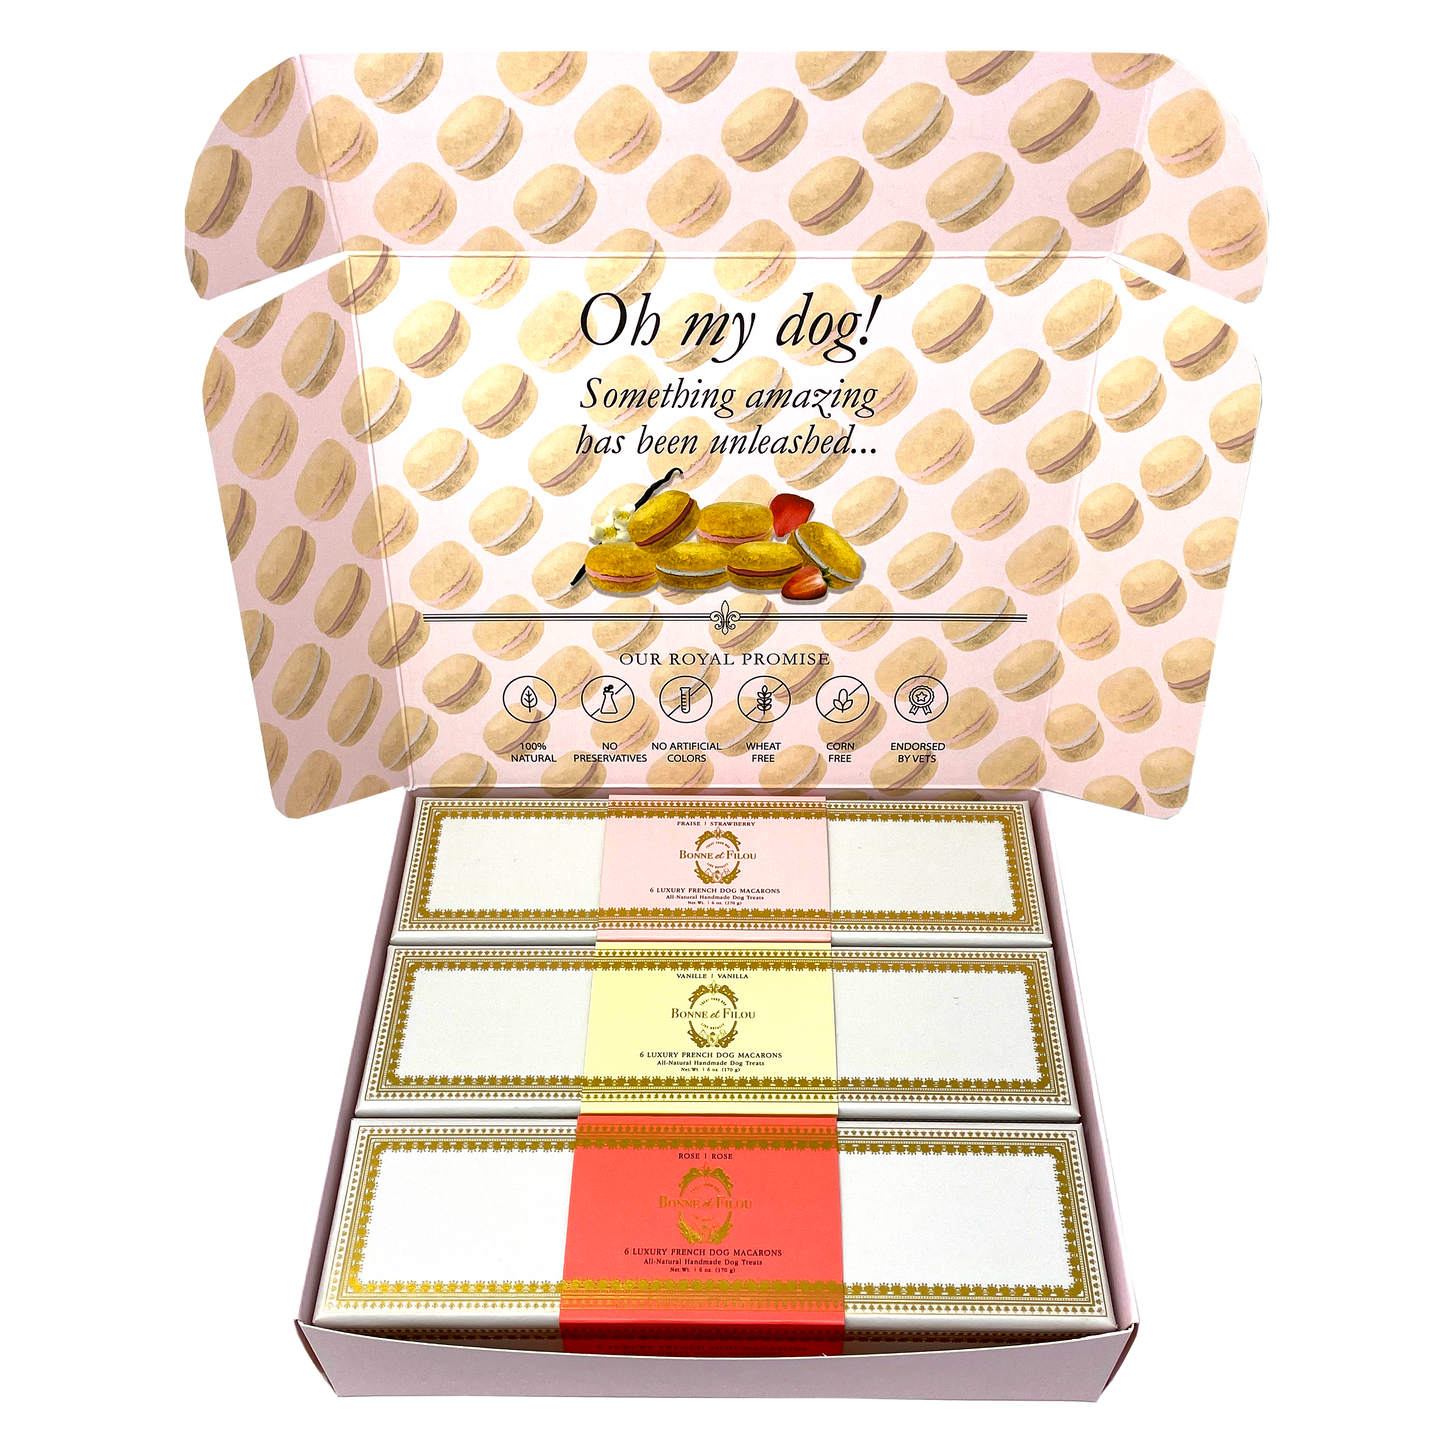 Dog Macaron Combo Gift Box (18 French Dog Macarons) by Bonne et Filou